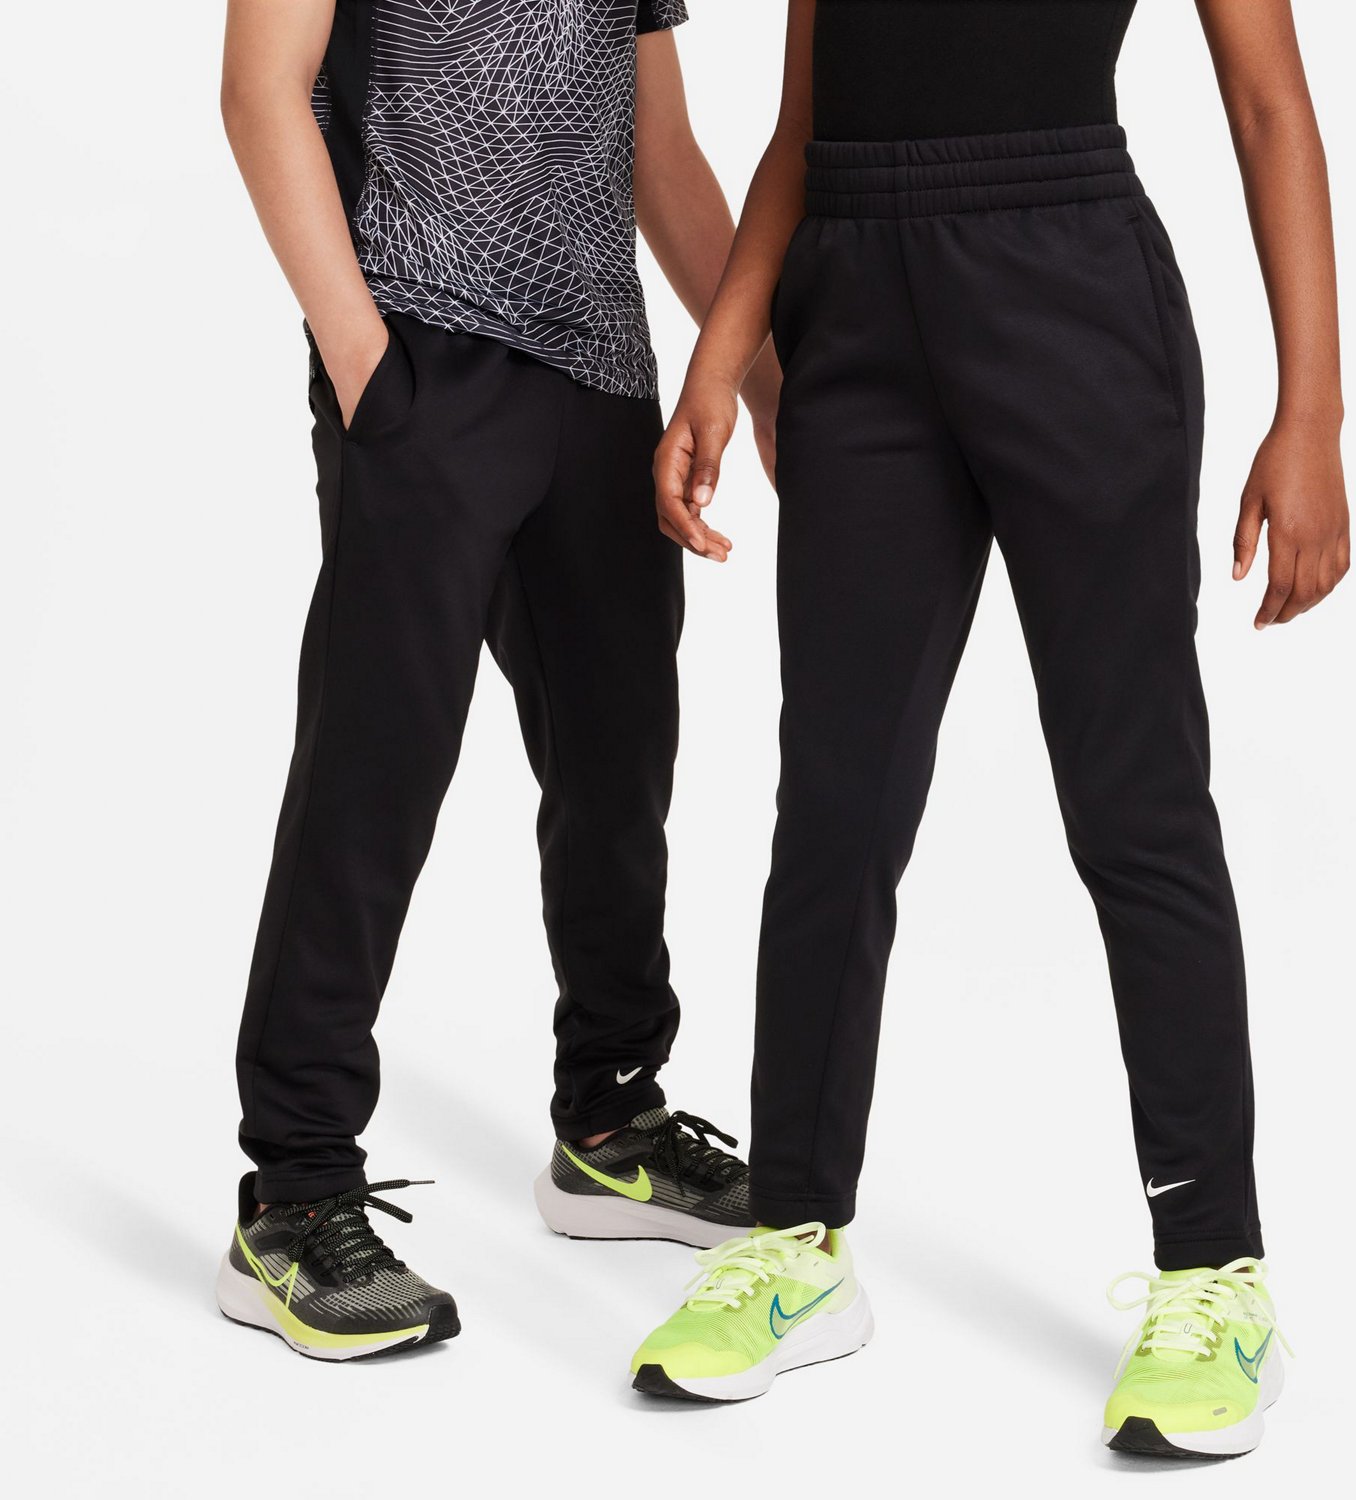 & Joggers Boys\' | Match Price Guaranteed Nike Sweatpants